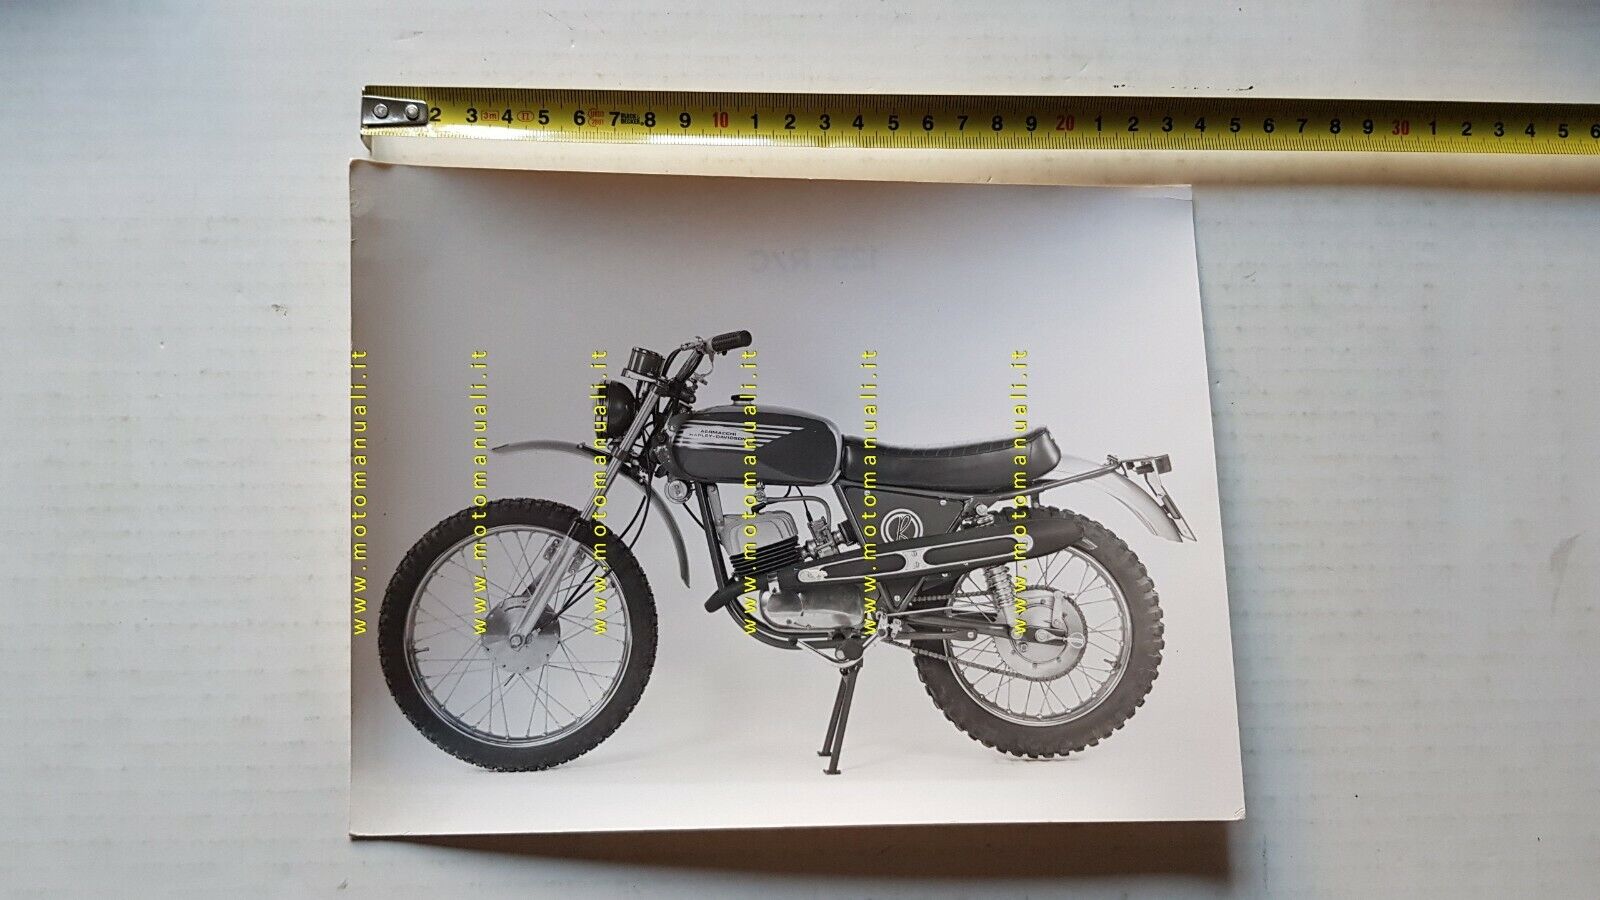 Aermacchi Harley Davidson 125 R/C 1971 foto cartella stampa no depliant  